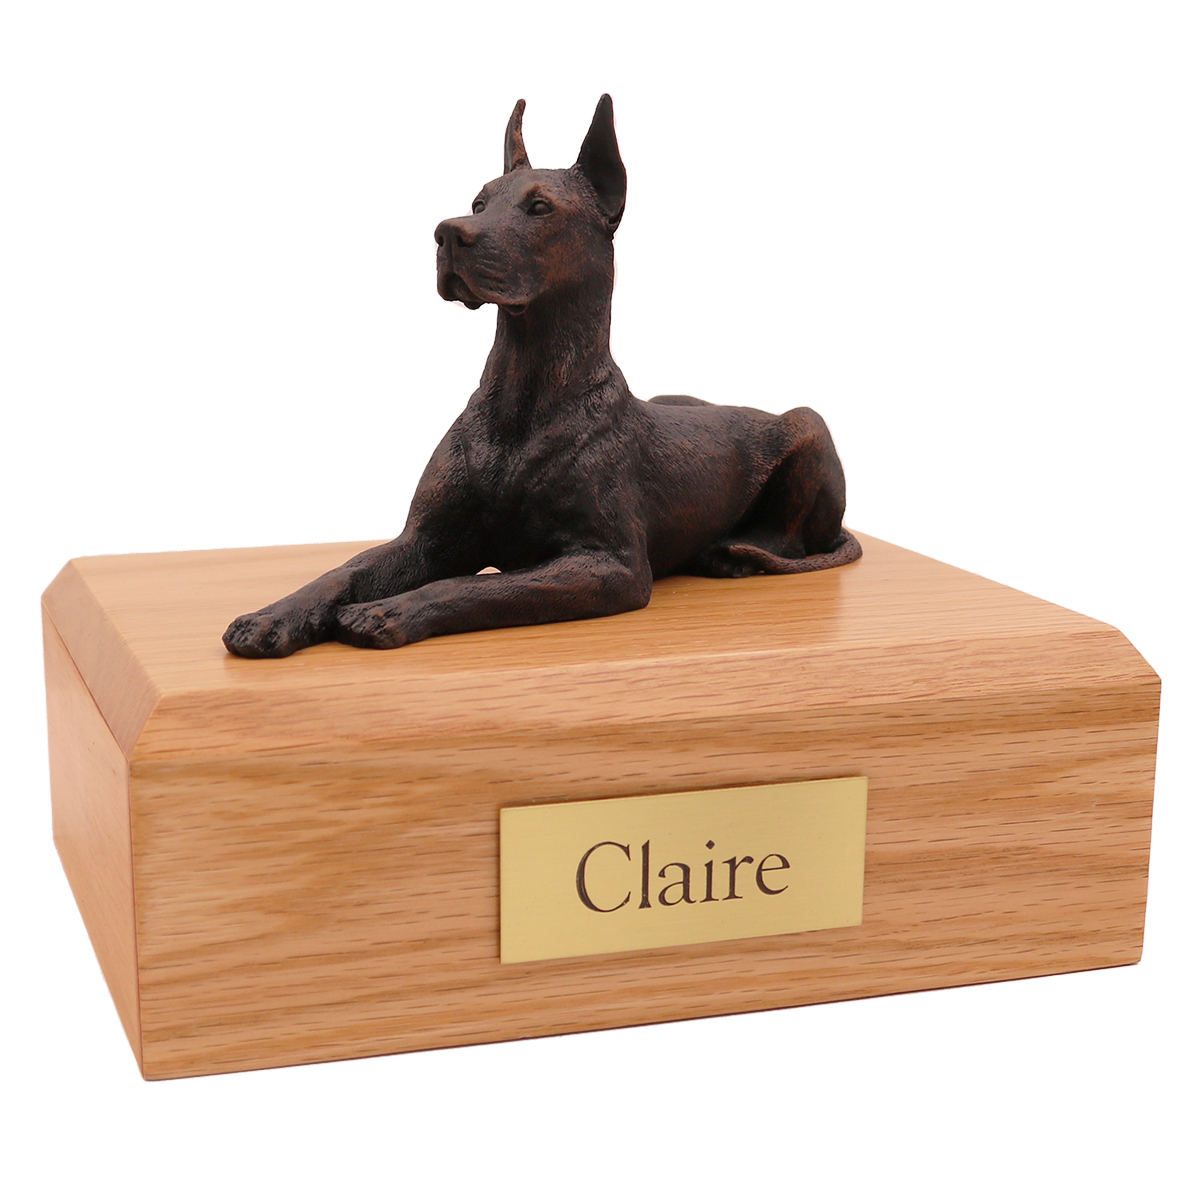 Dog, Great Dane, Bronze - ears up - Figurine Urn